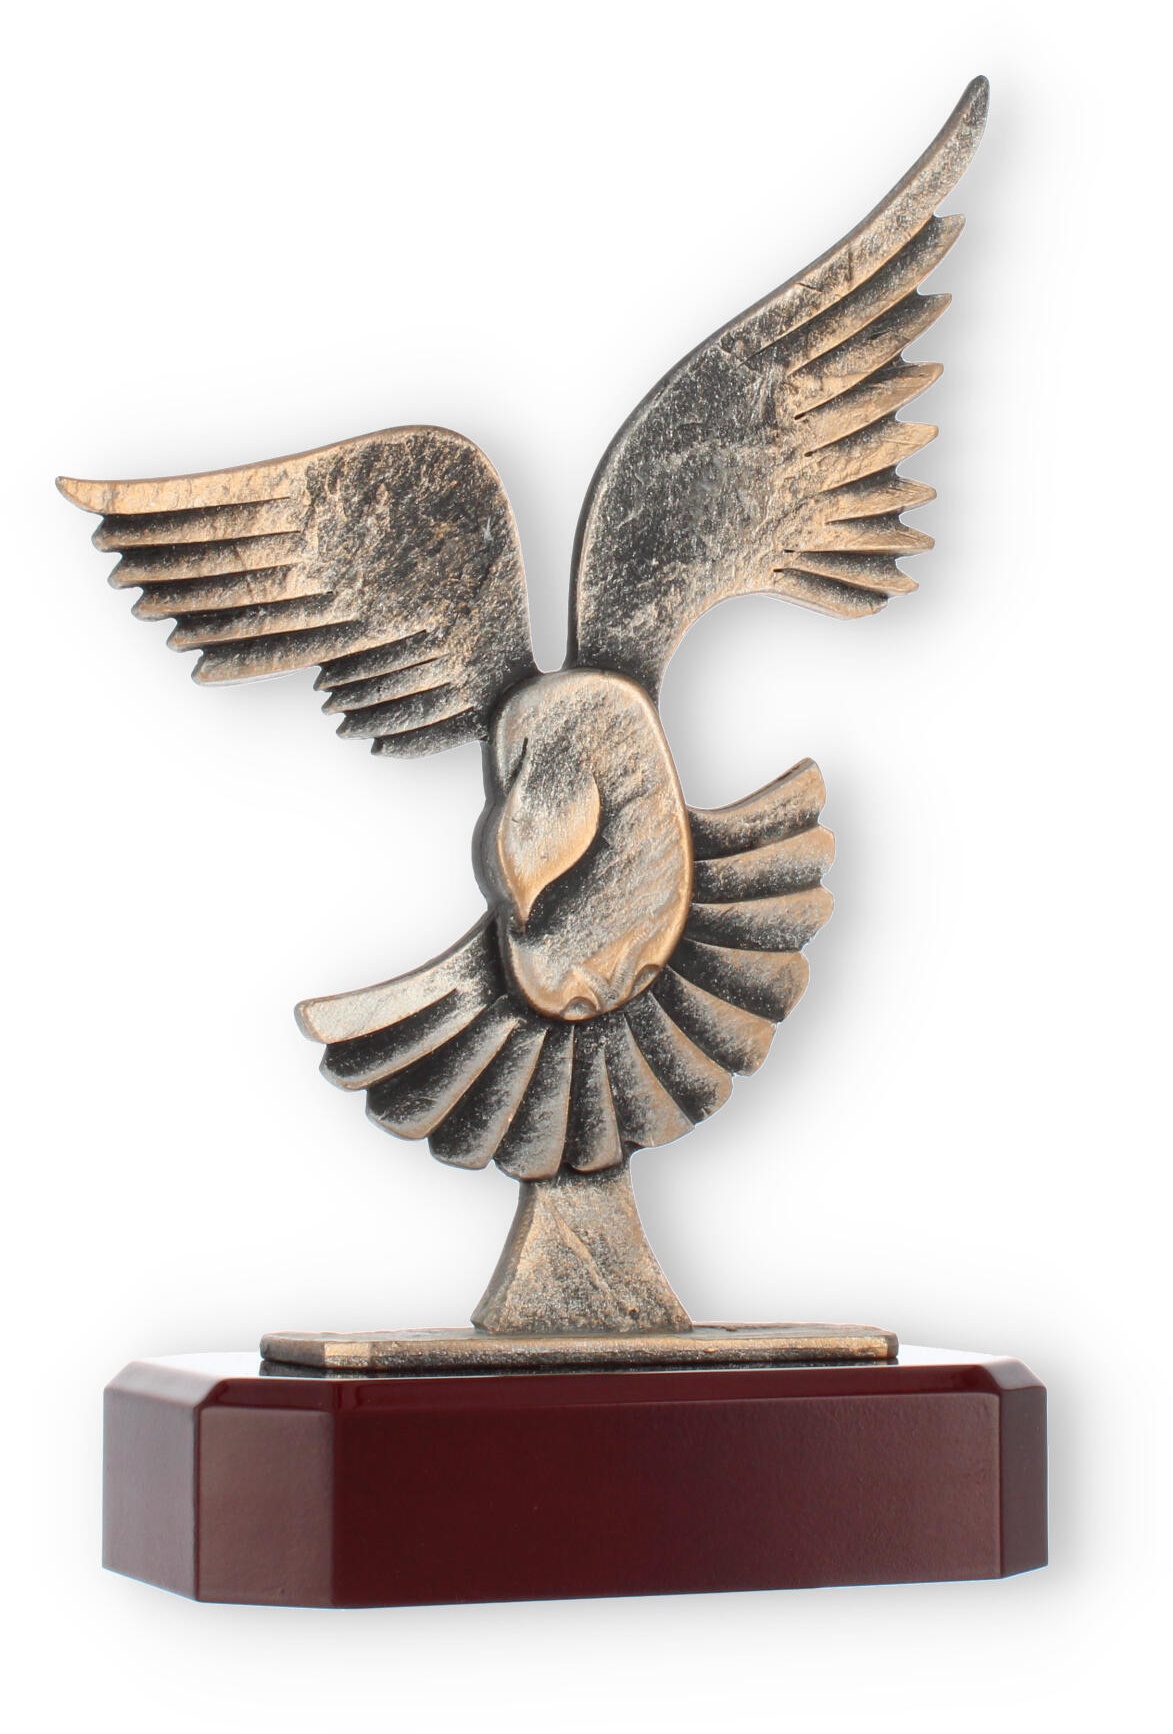 Pokal Zamakfigur Taube im Flug altgold auf mahagonifarbenen Holzsockel 23,0cm